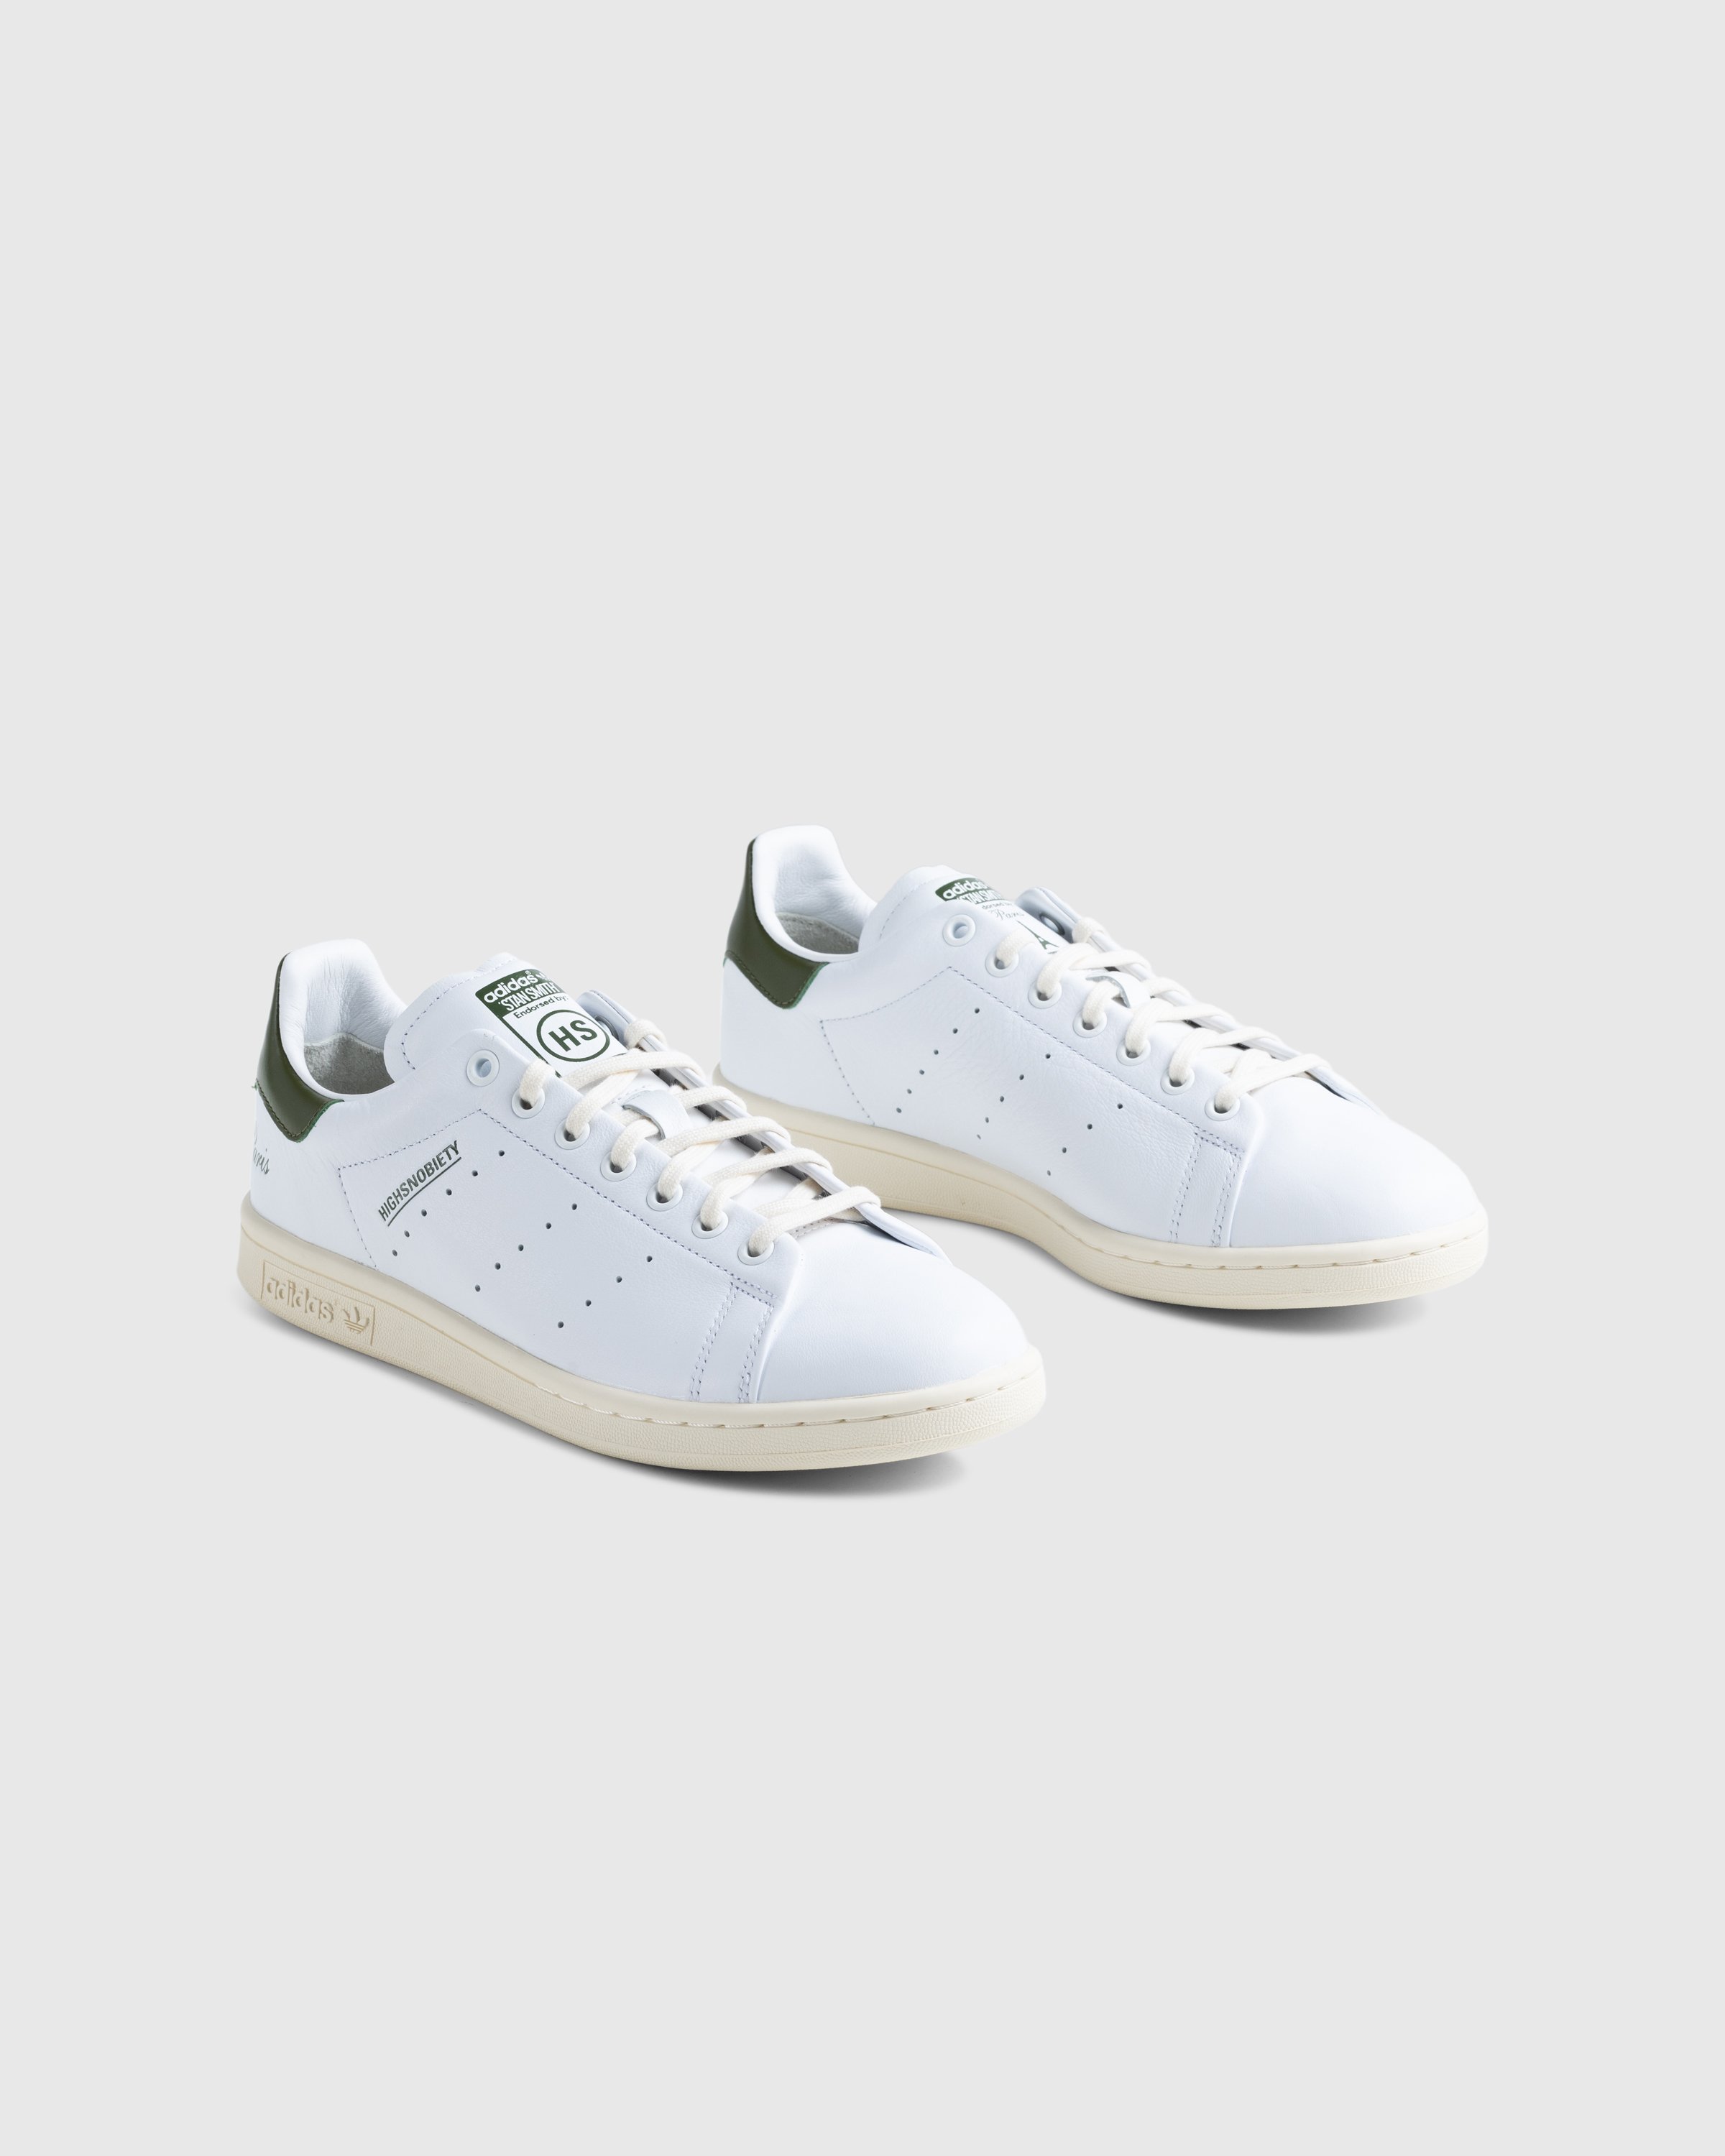 Adidas x Highsnobiety - Not In Paris Stan Smith White/Green - Footwear - White - Image 3